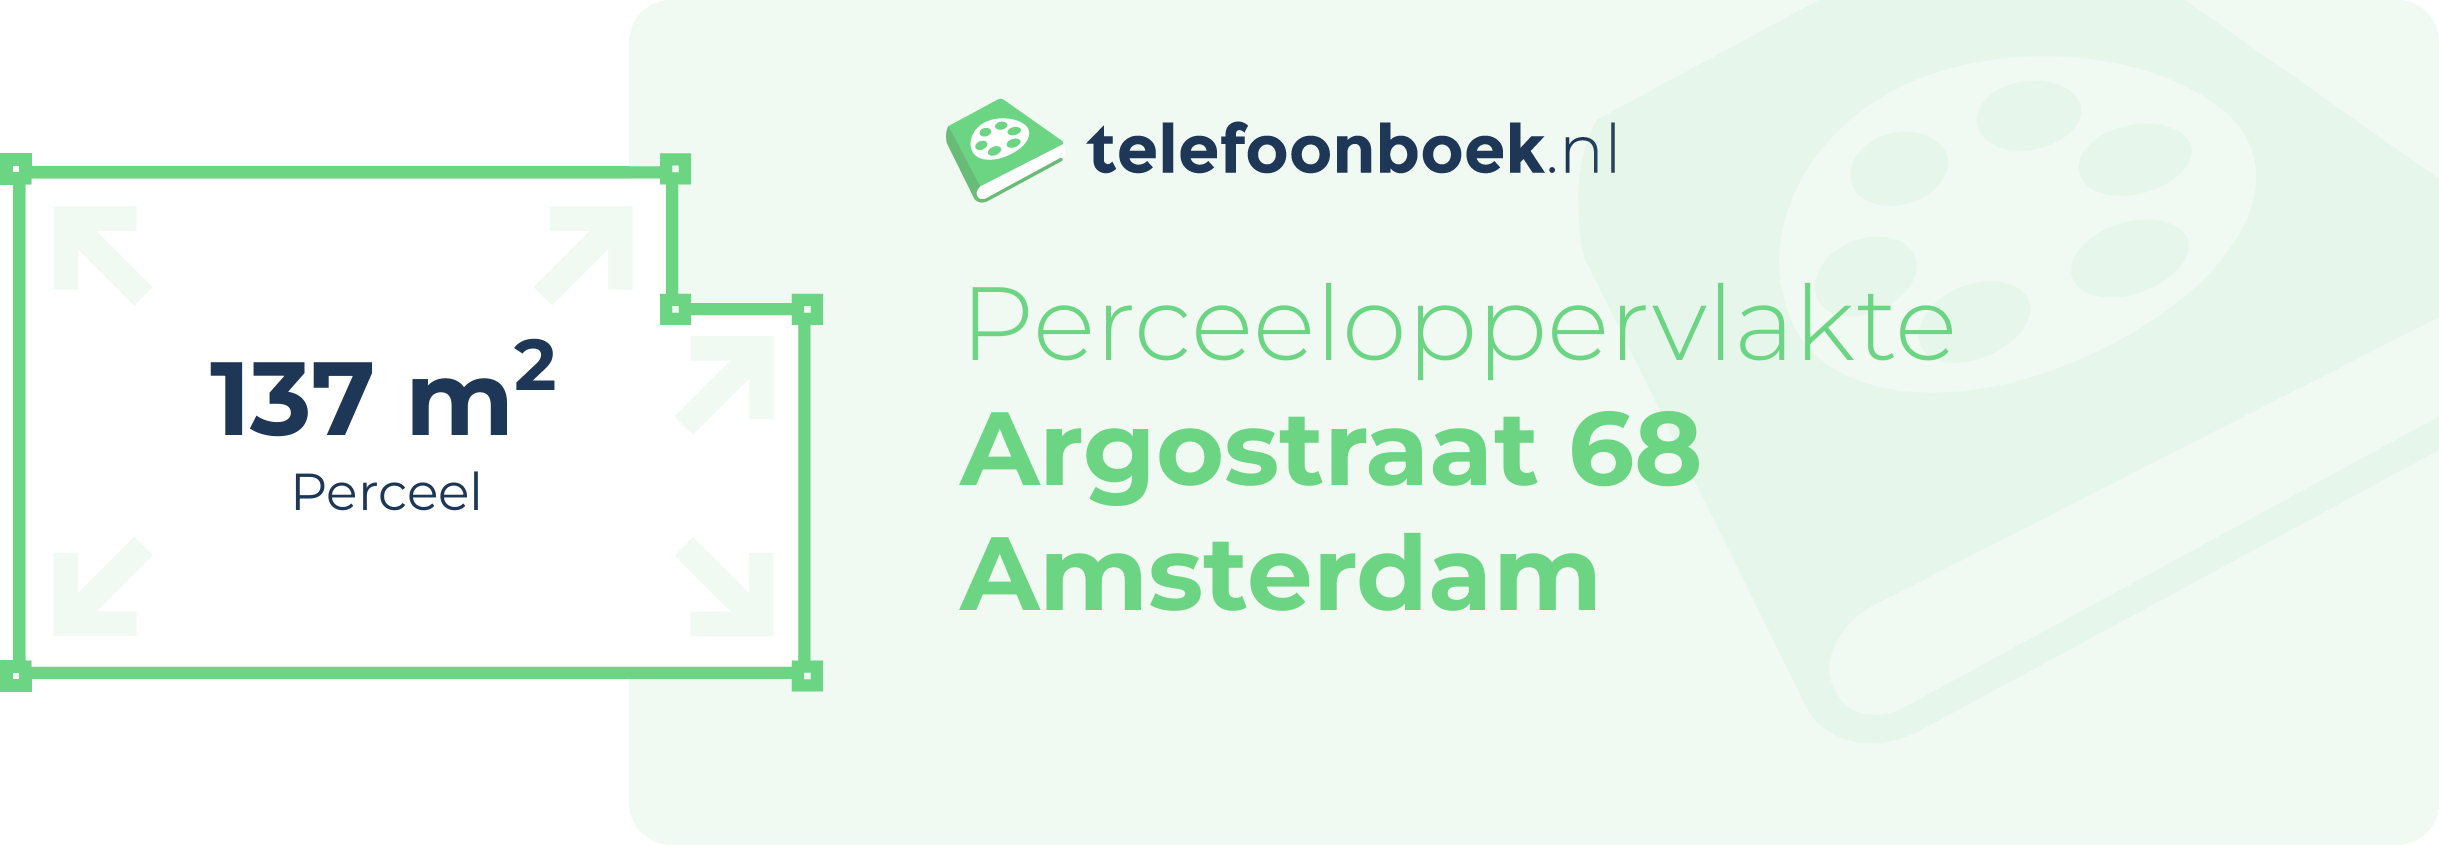 Perceeloppervlakte Argostraat 68 Amsterdam